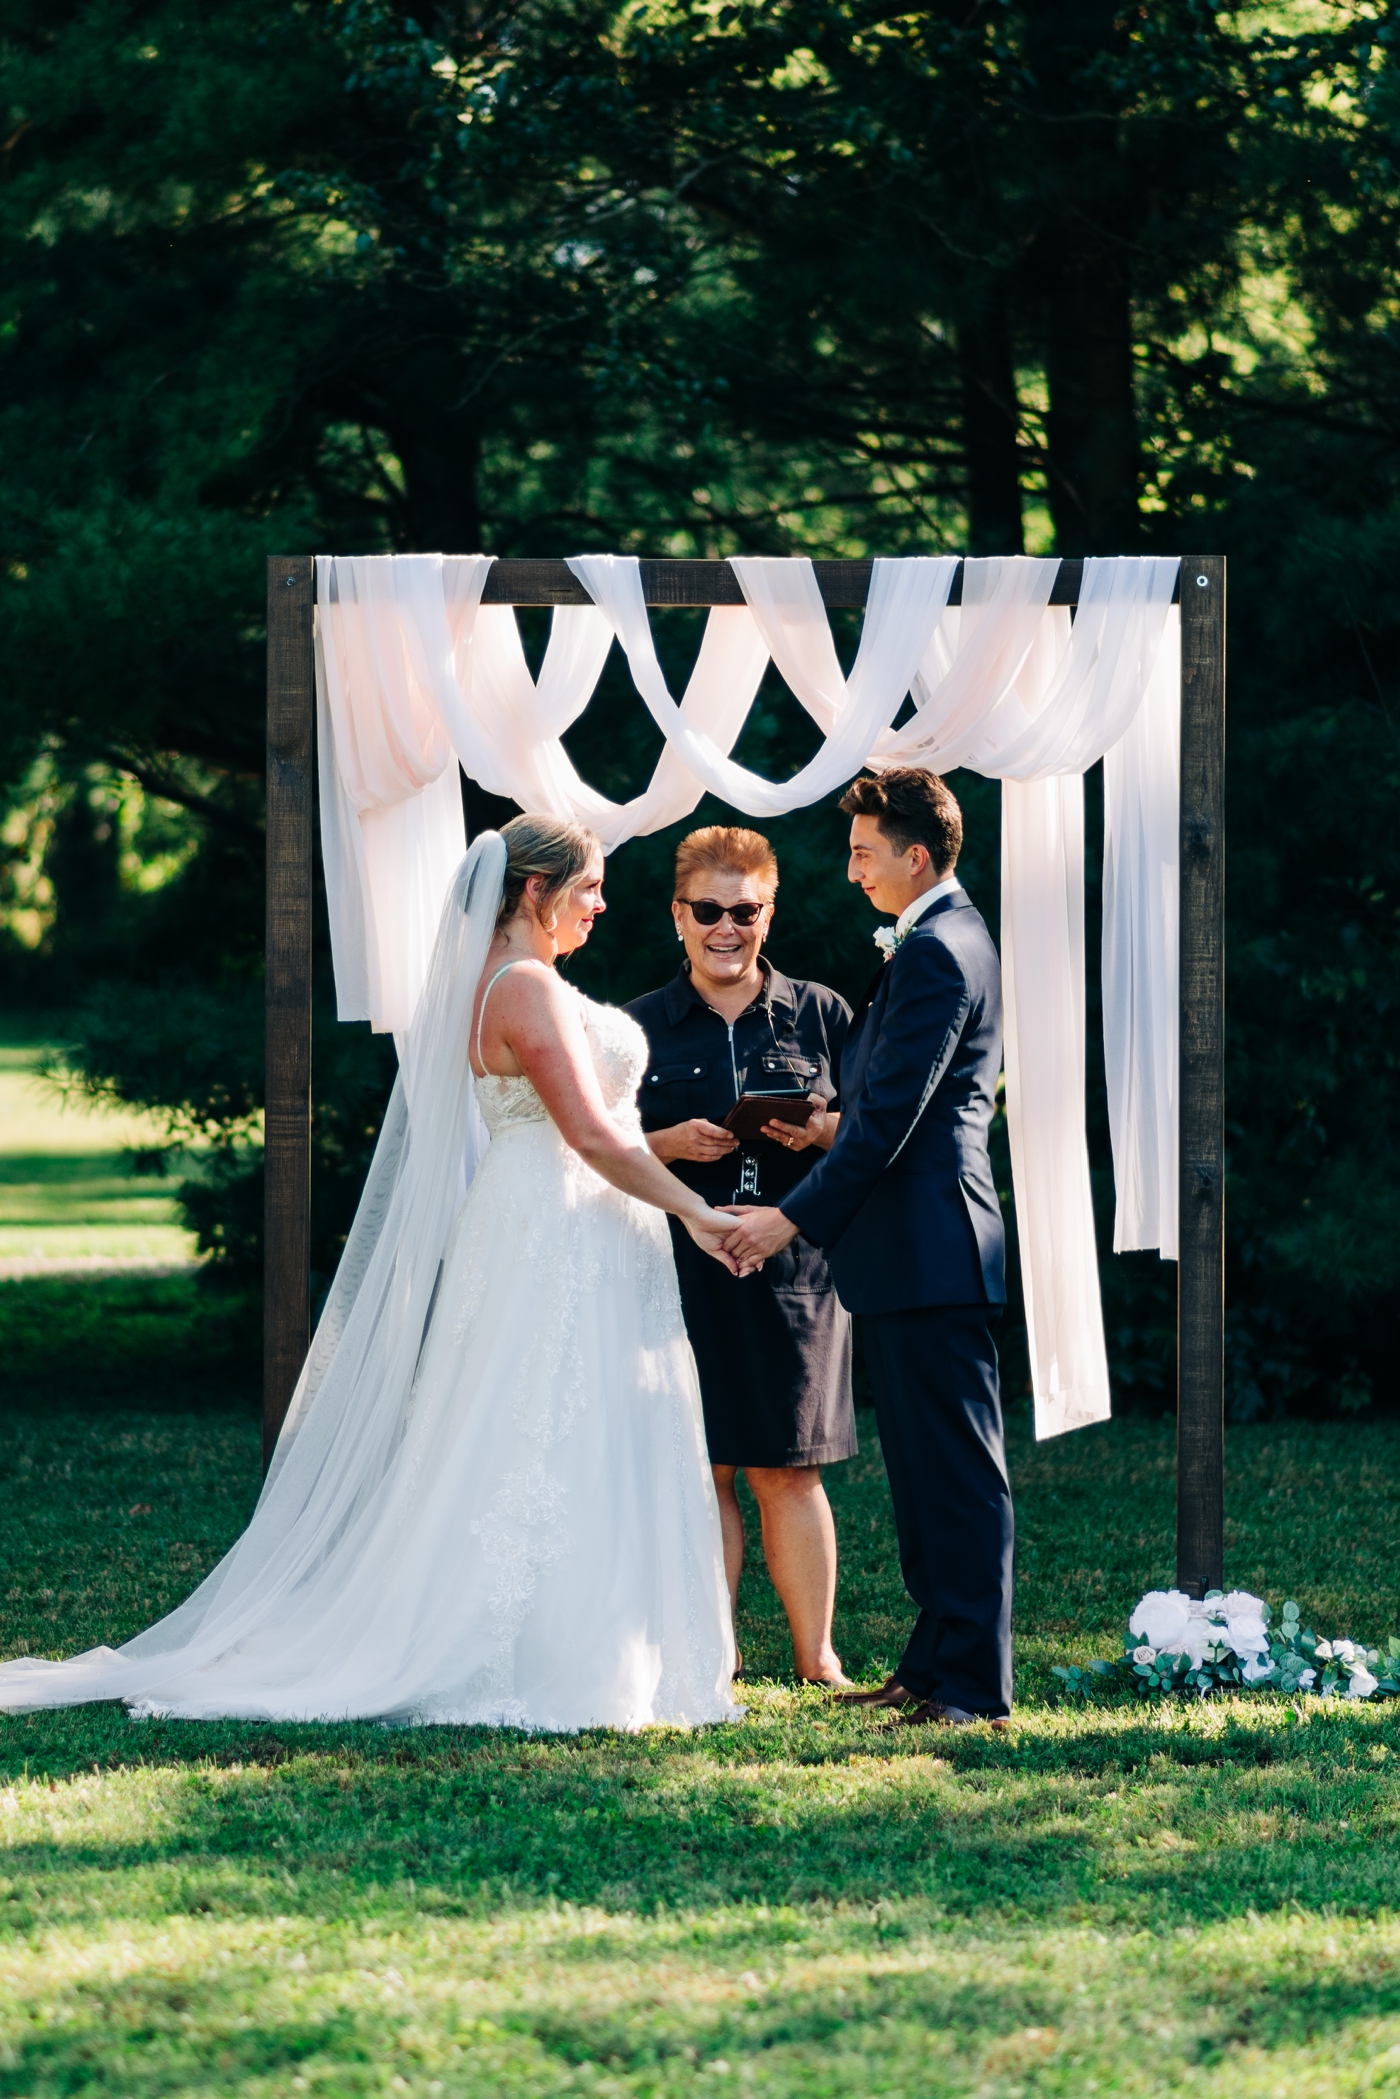 Outdoor backyard wedding ceremony in Greenwood, Indiana